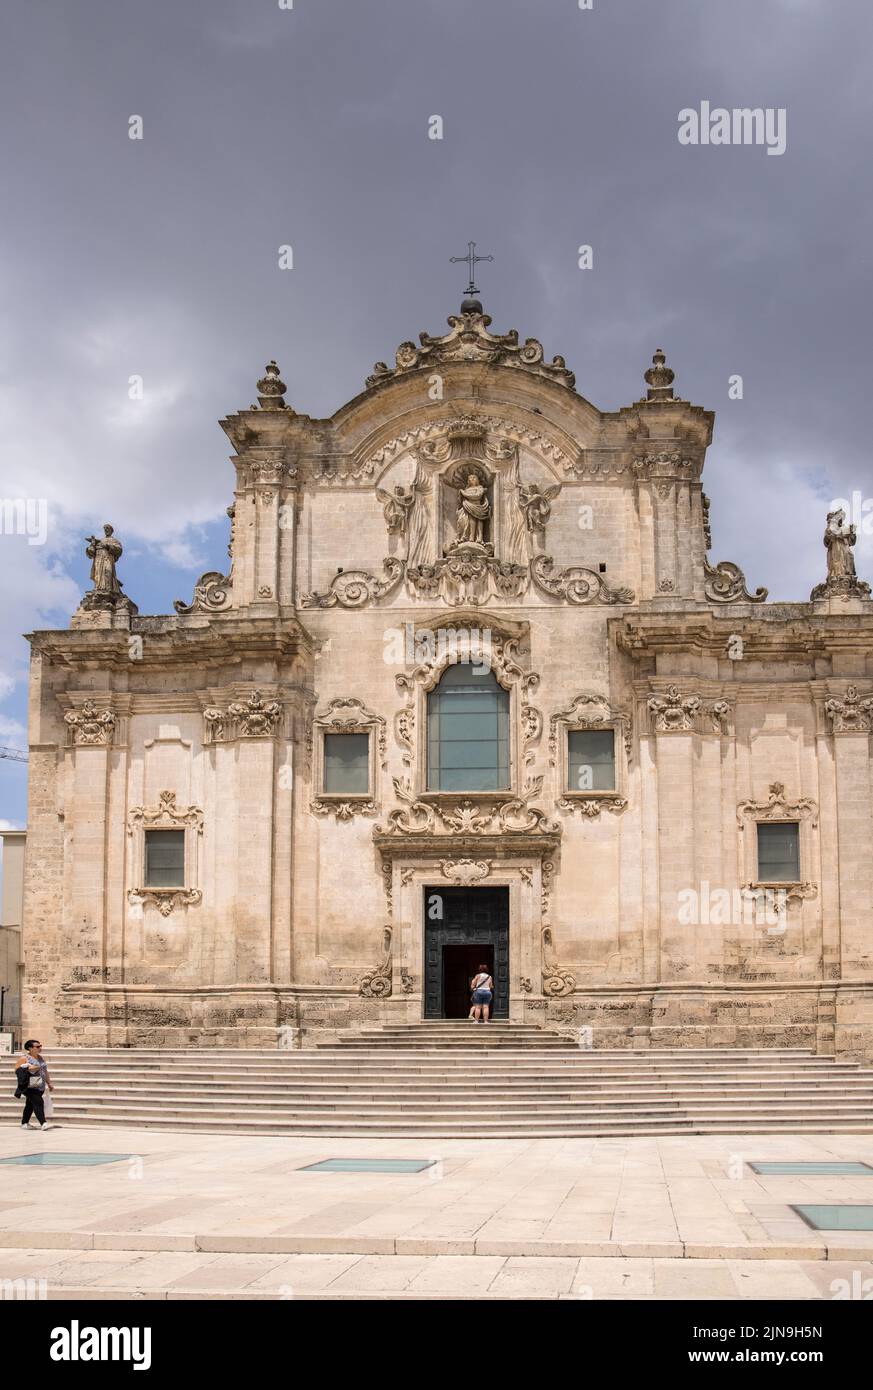 chiesa di san francesco d'assisi, en la plaza de matera, una ciudad declarada patrimonio de la humanidad por la unesco en puglia, italia Foto de stock